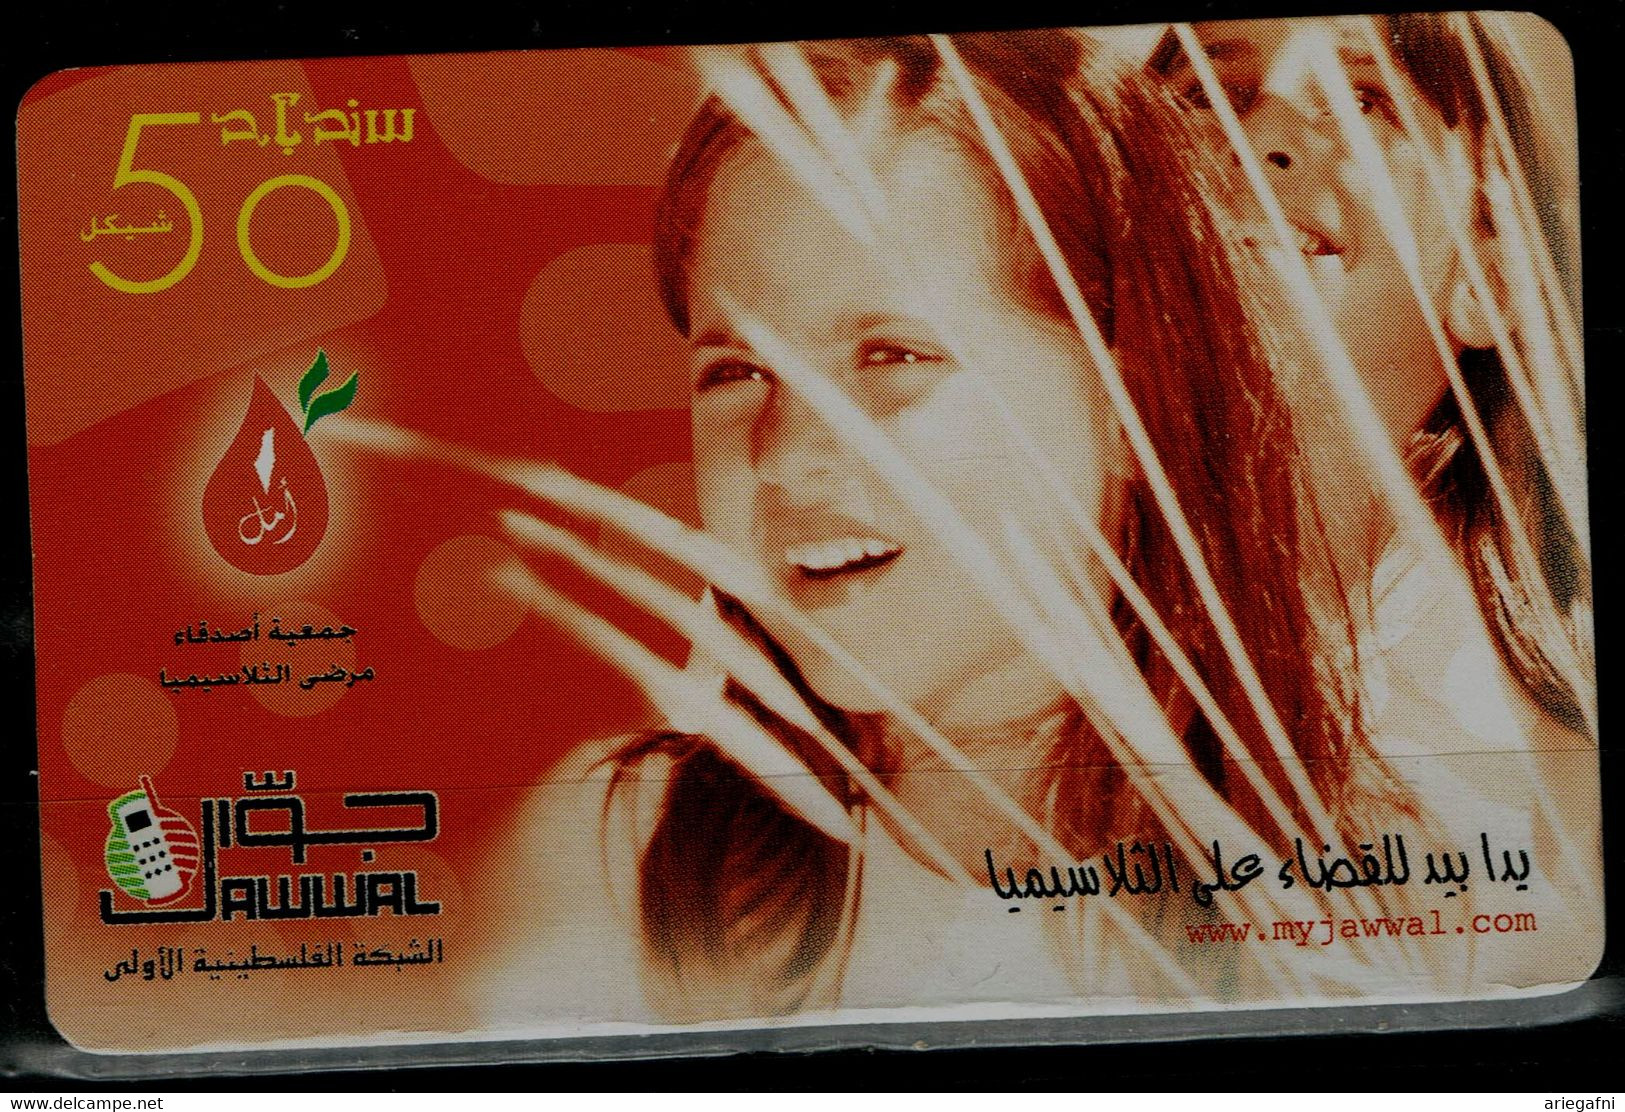 PALESTINE 2007 PHONECARD JAWWAL PRIVATE CALLING CARD CHILDREN USED VF!! - Palestine